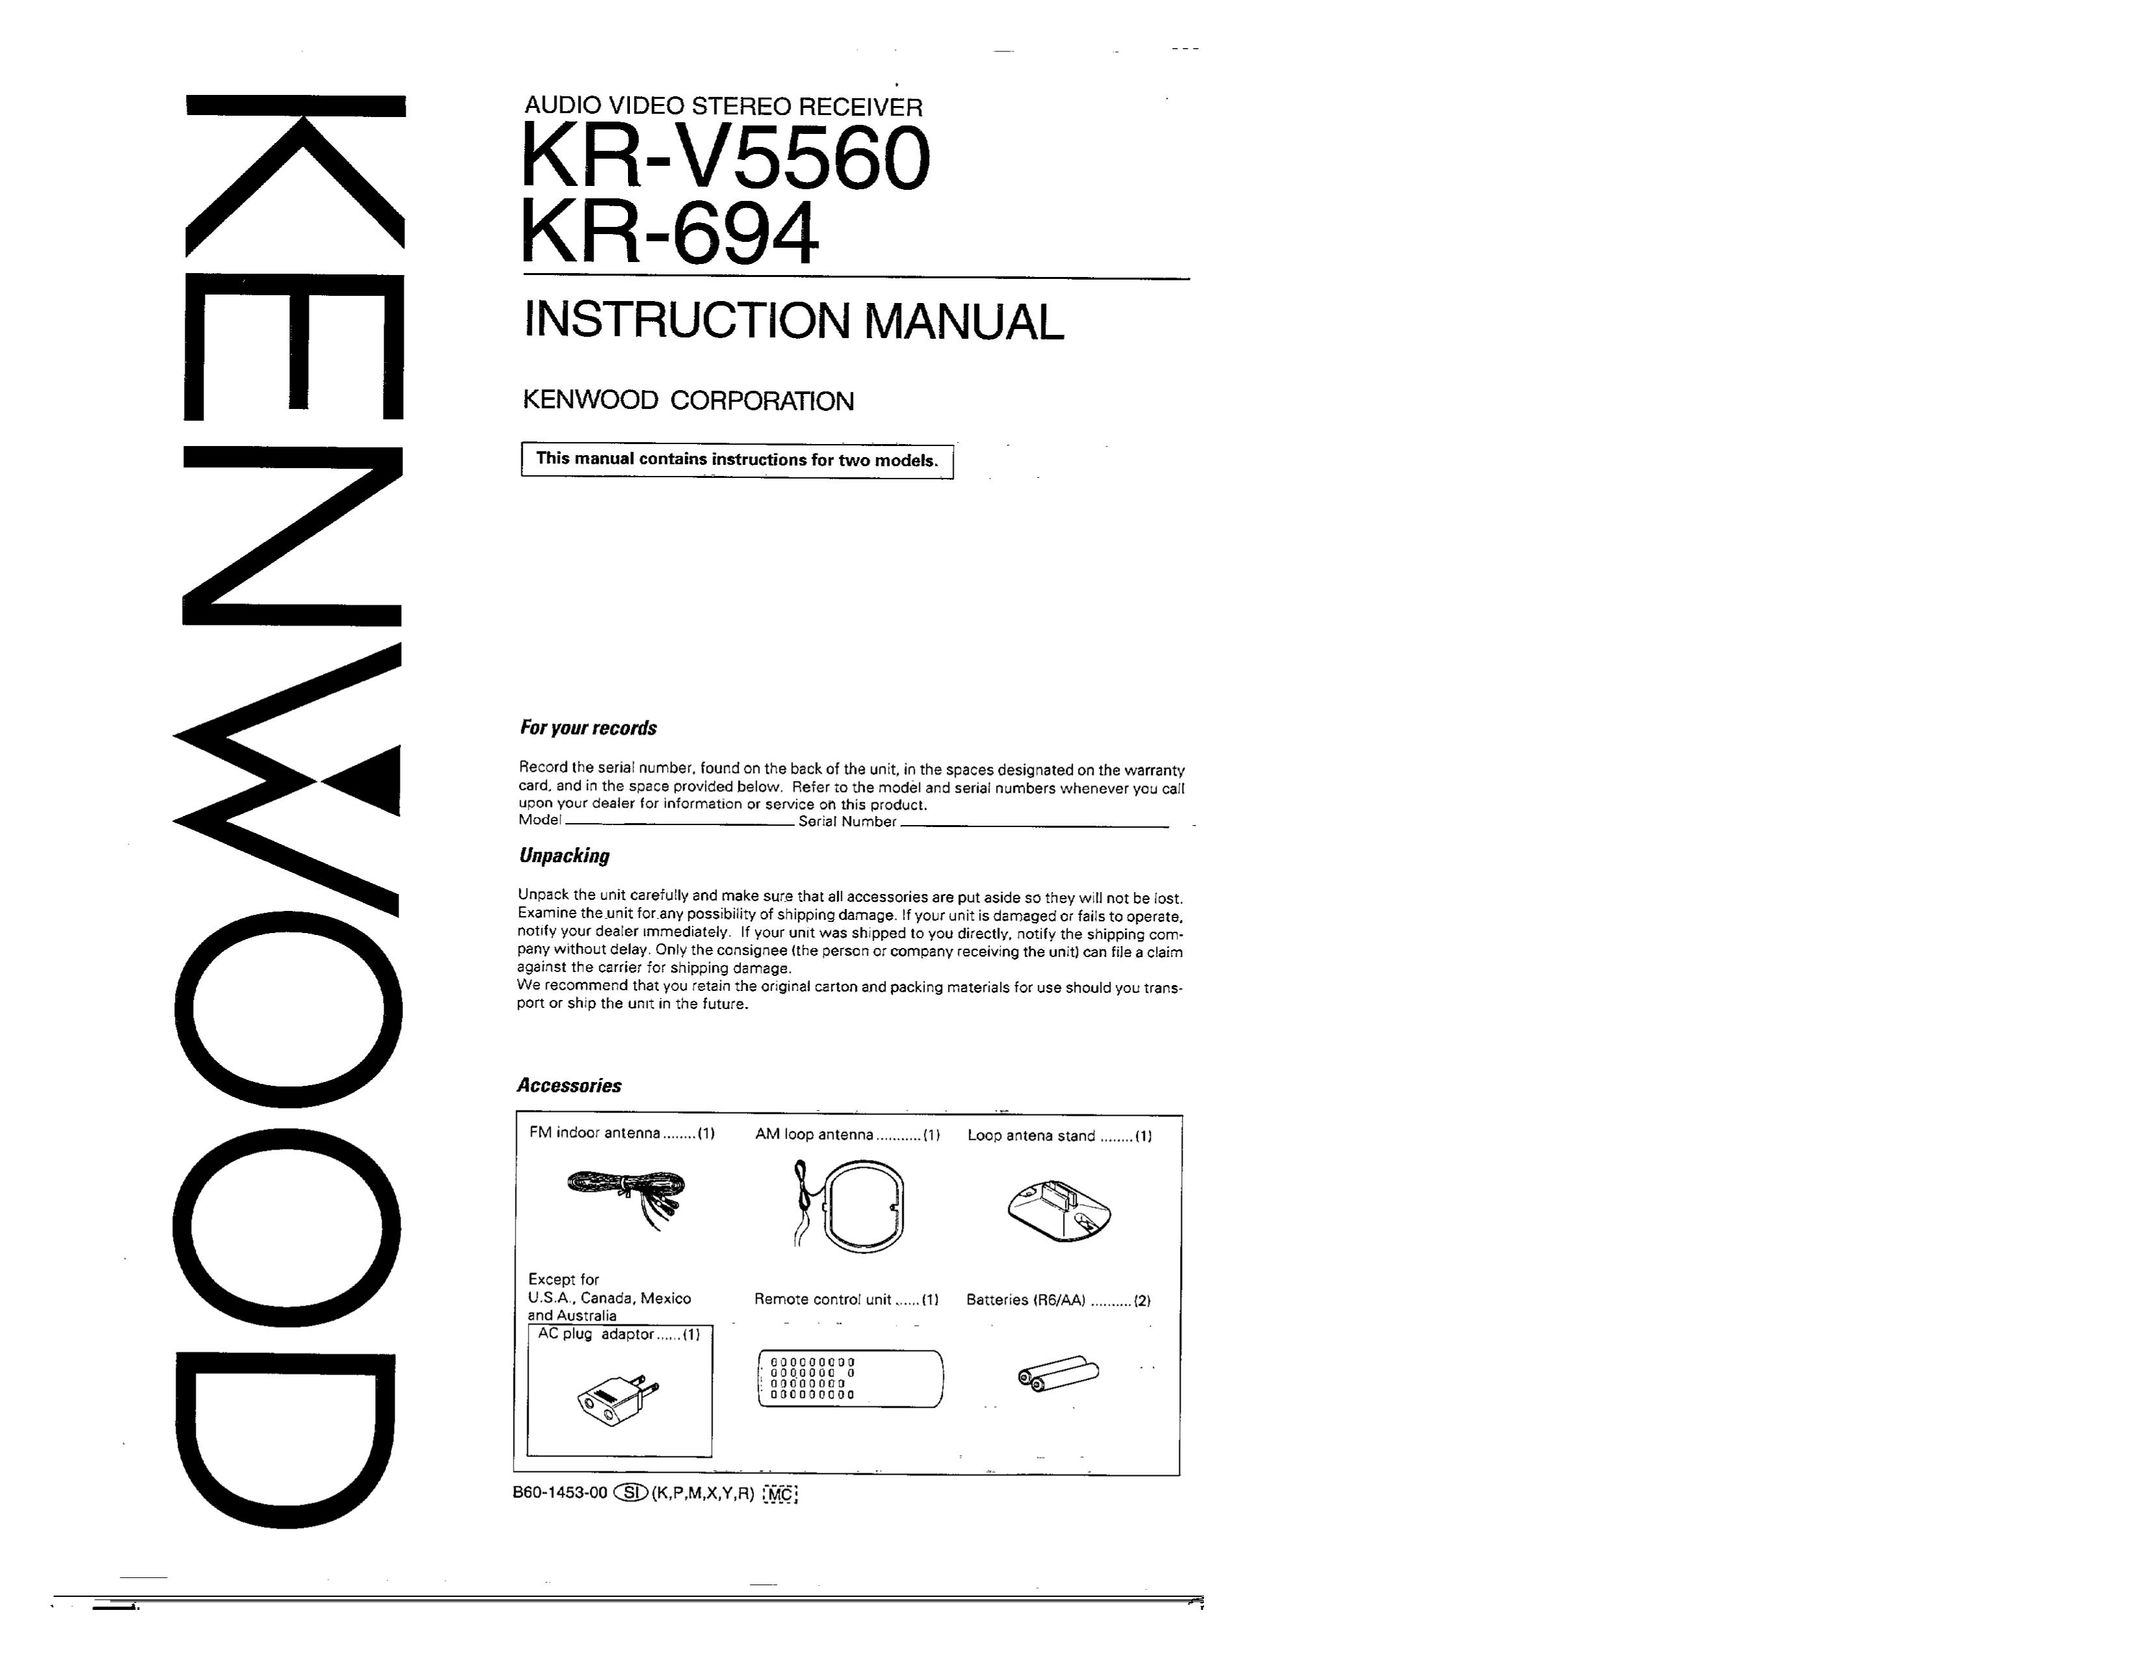 Kenwood KR-694 Stereo Receiver User Manual